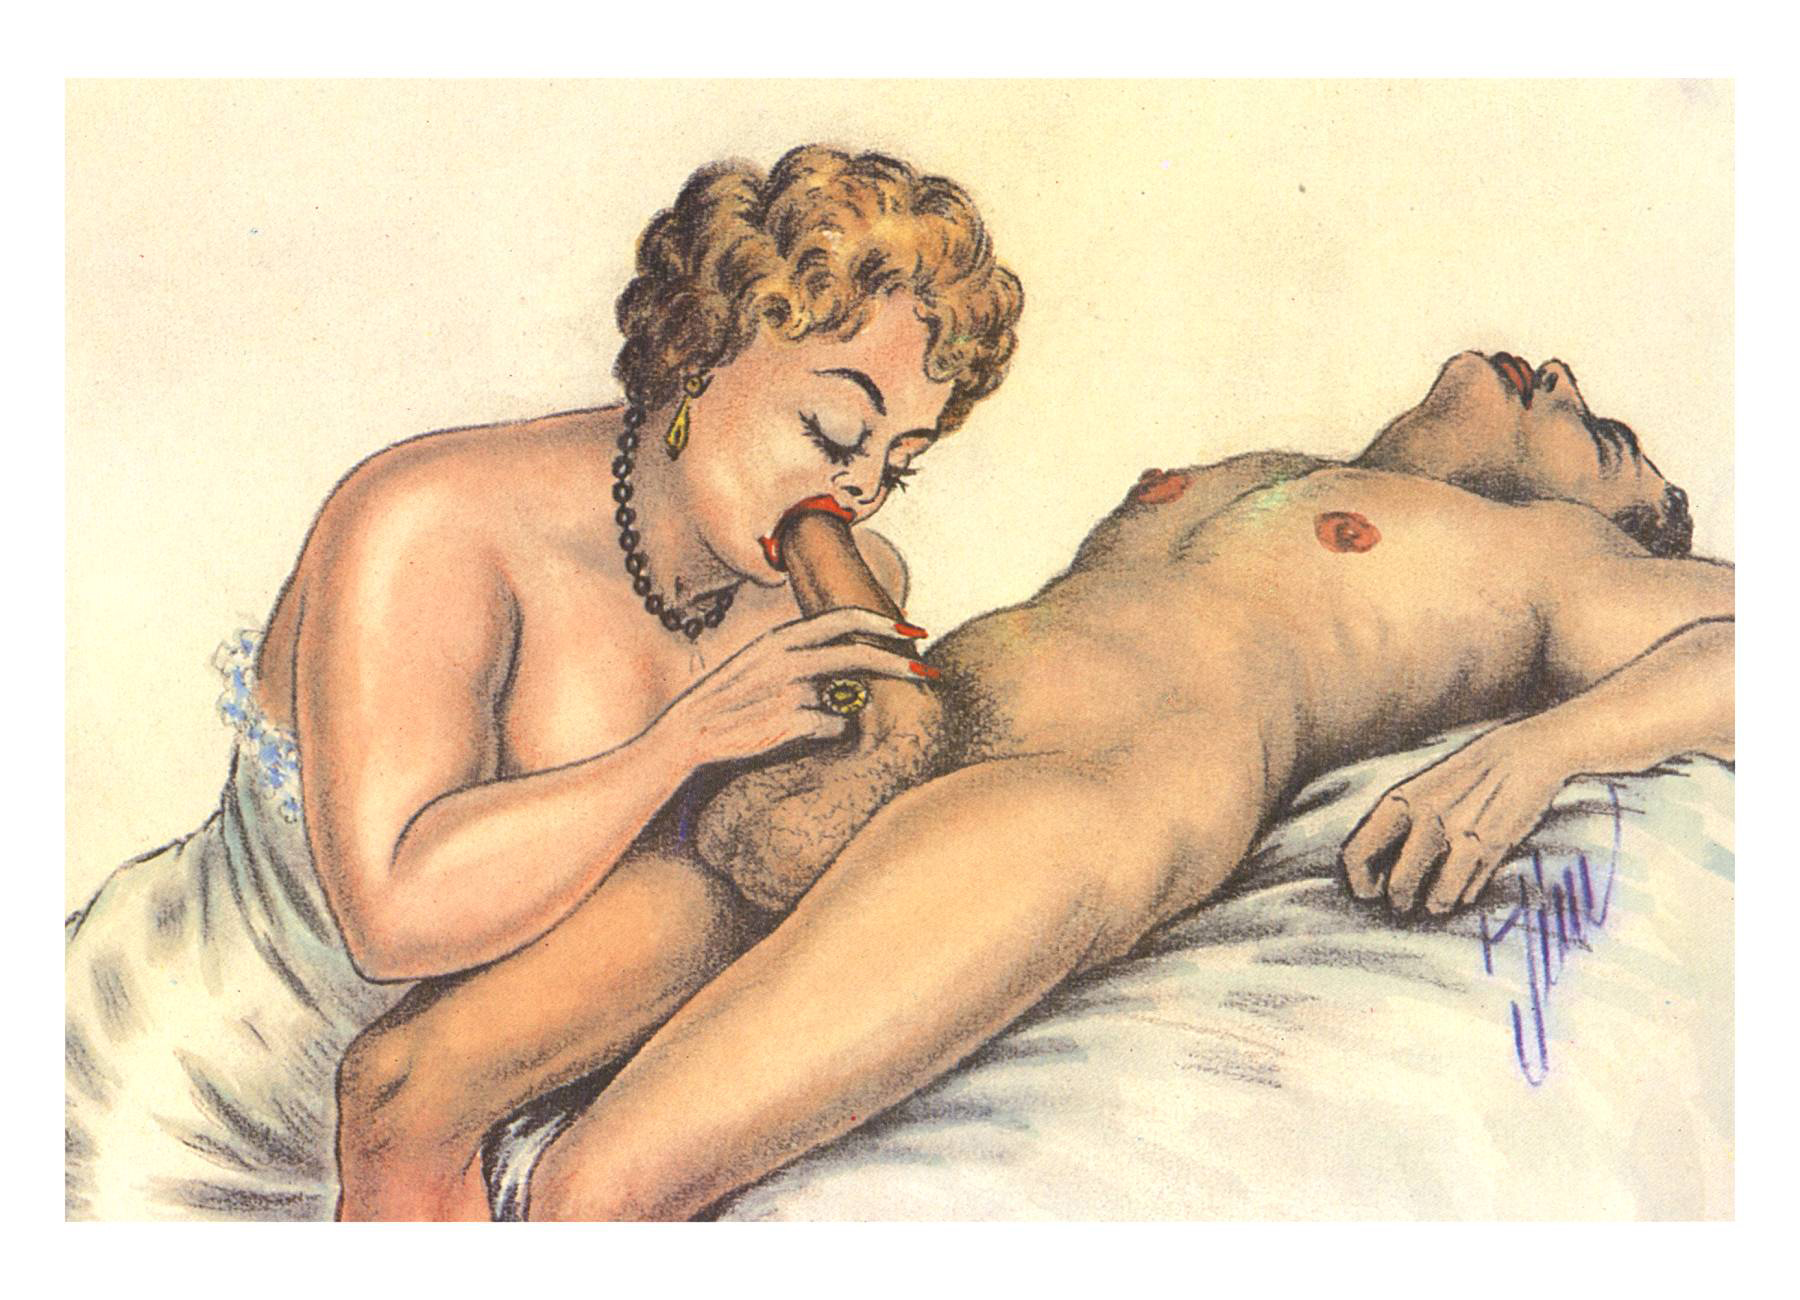 Animated Retro Sex - Hardcore Cartoon Sex image #192369